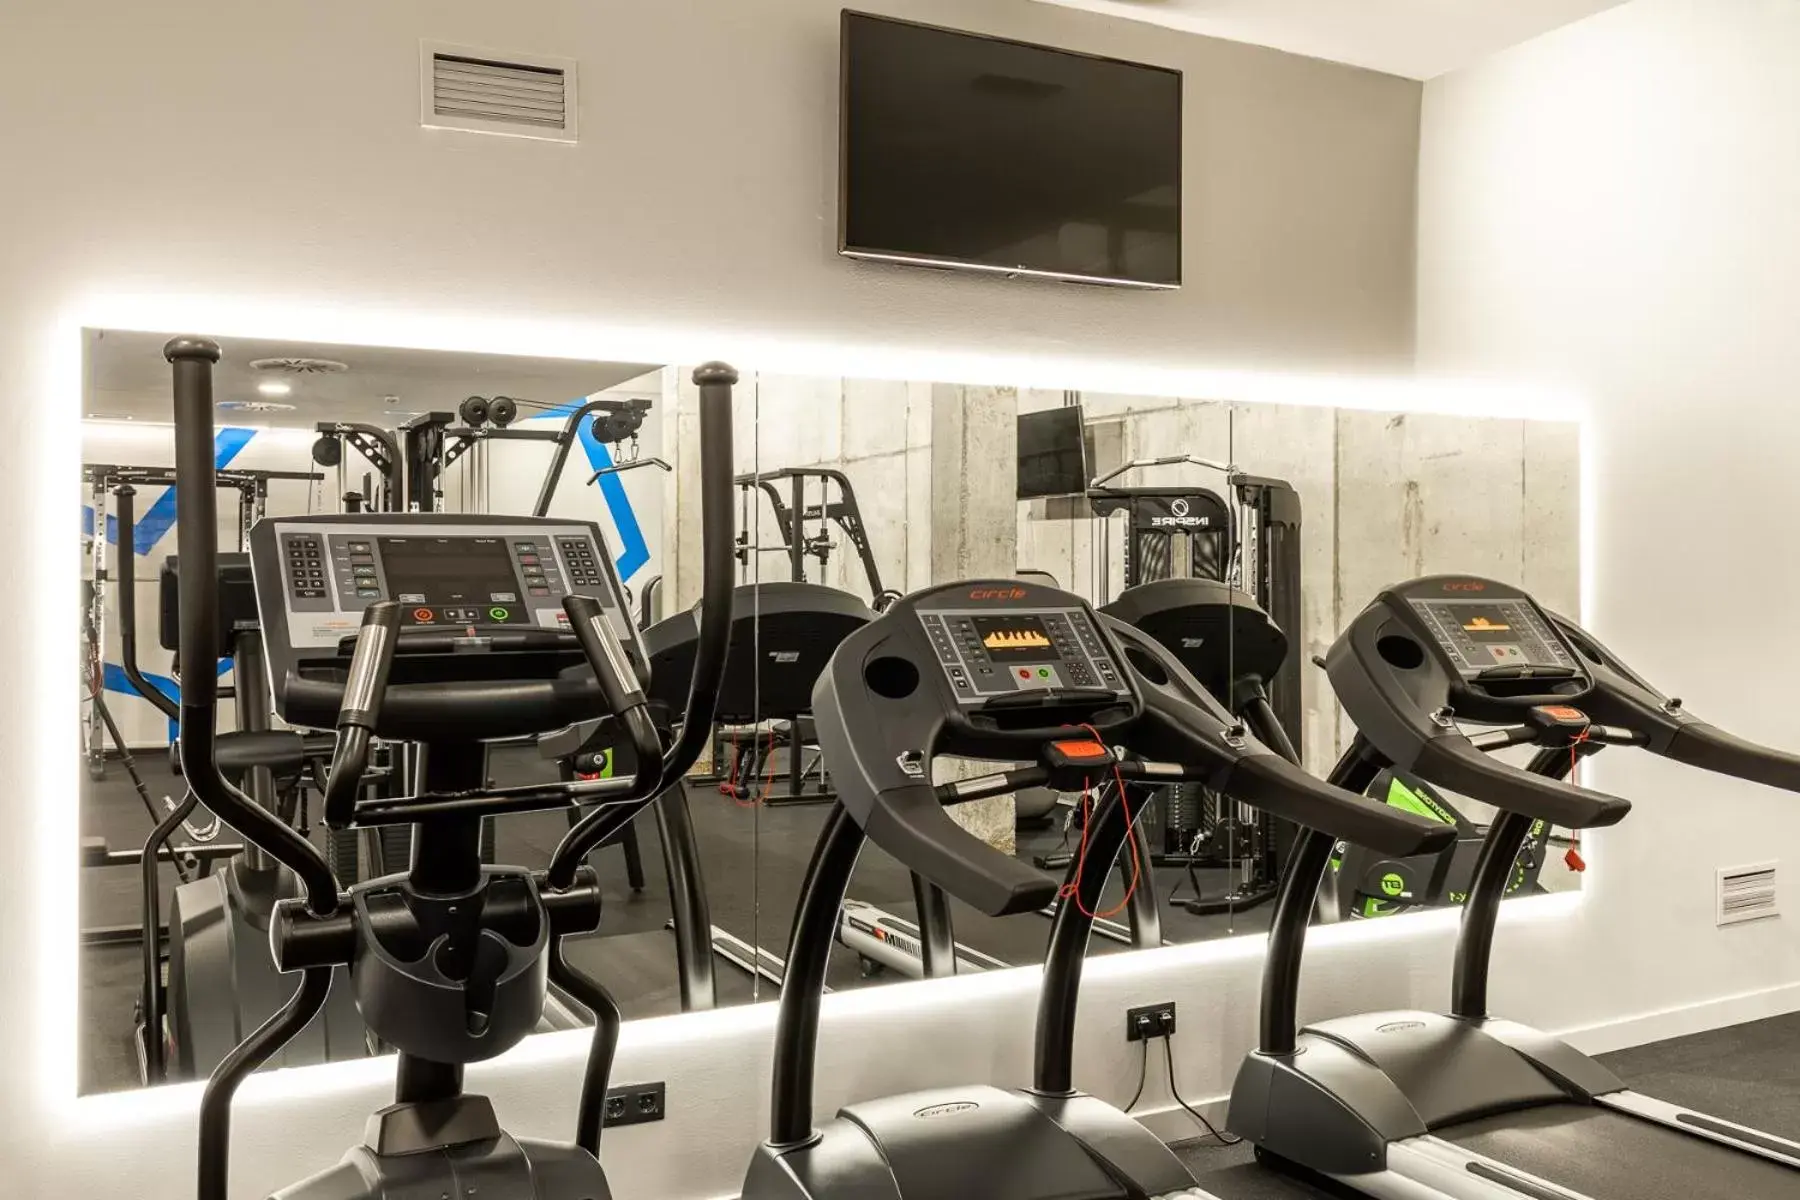 Fitness centre/facilities, Fitness Center/Facilities in Parador de El Saler